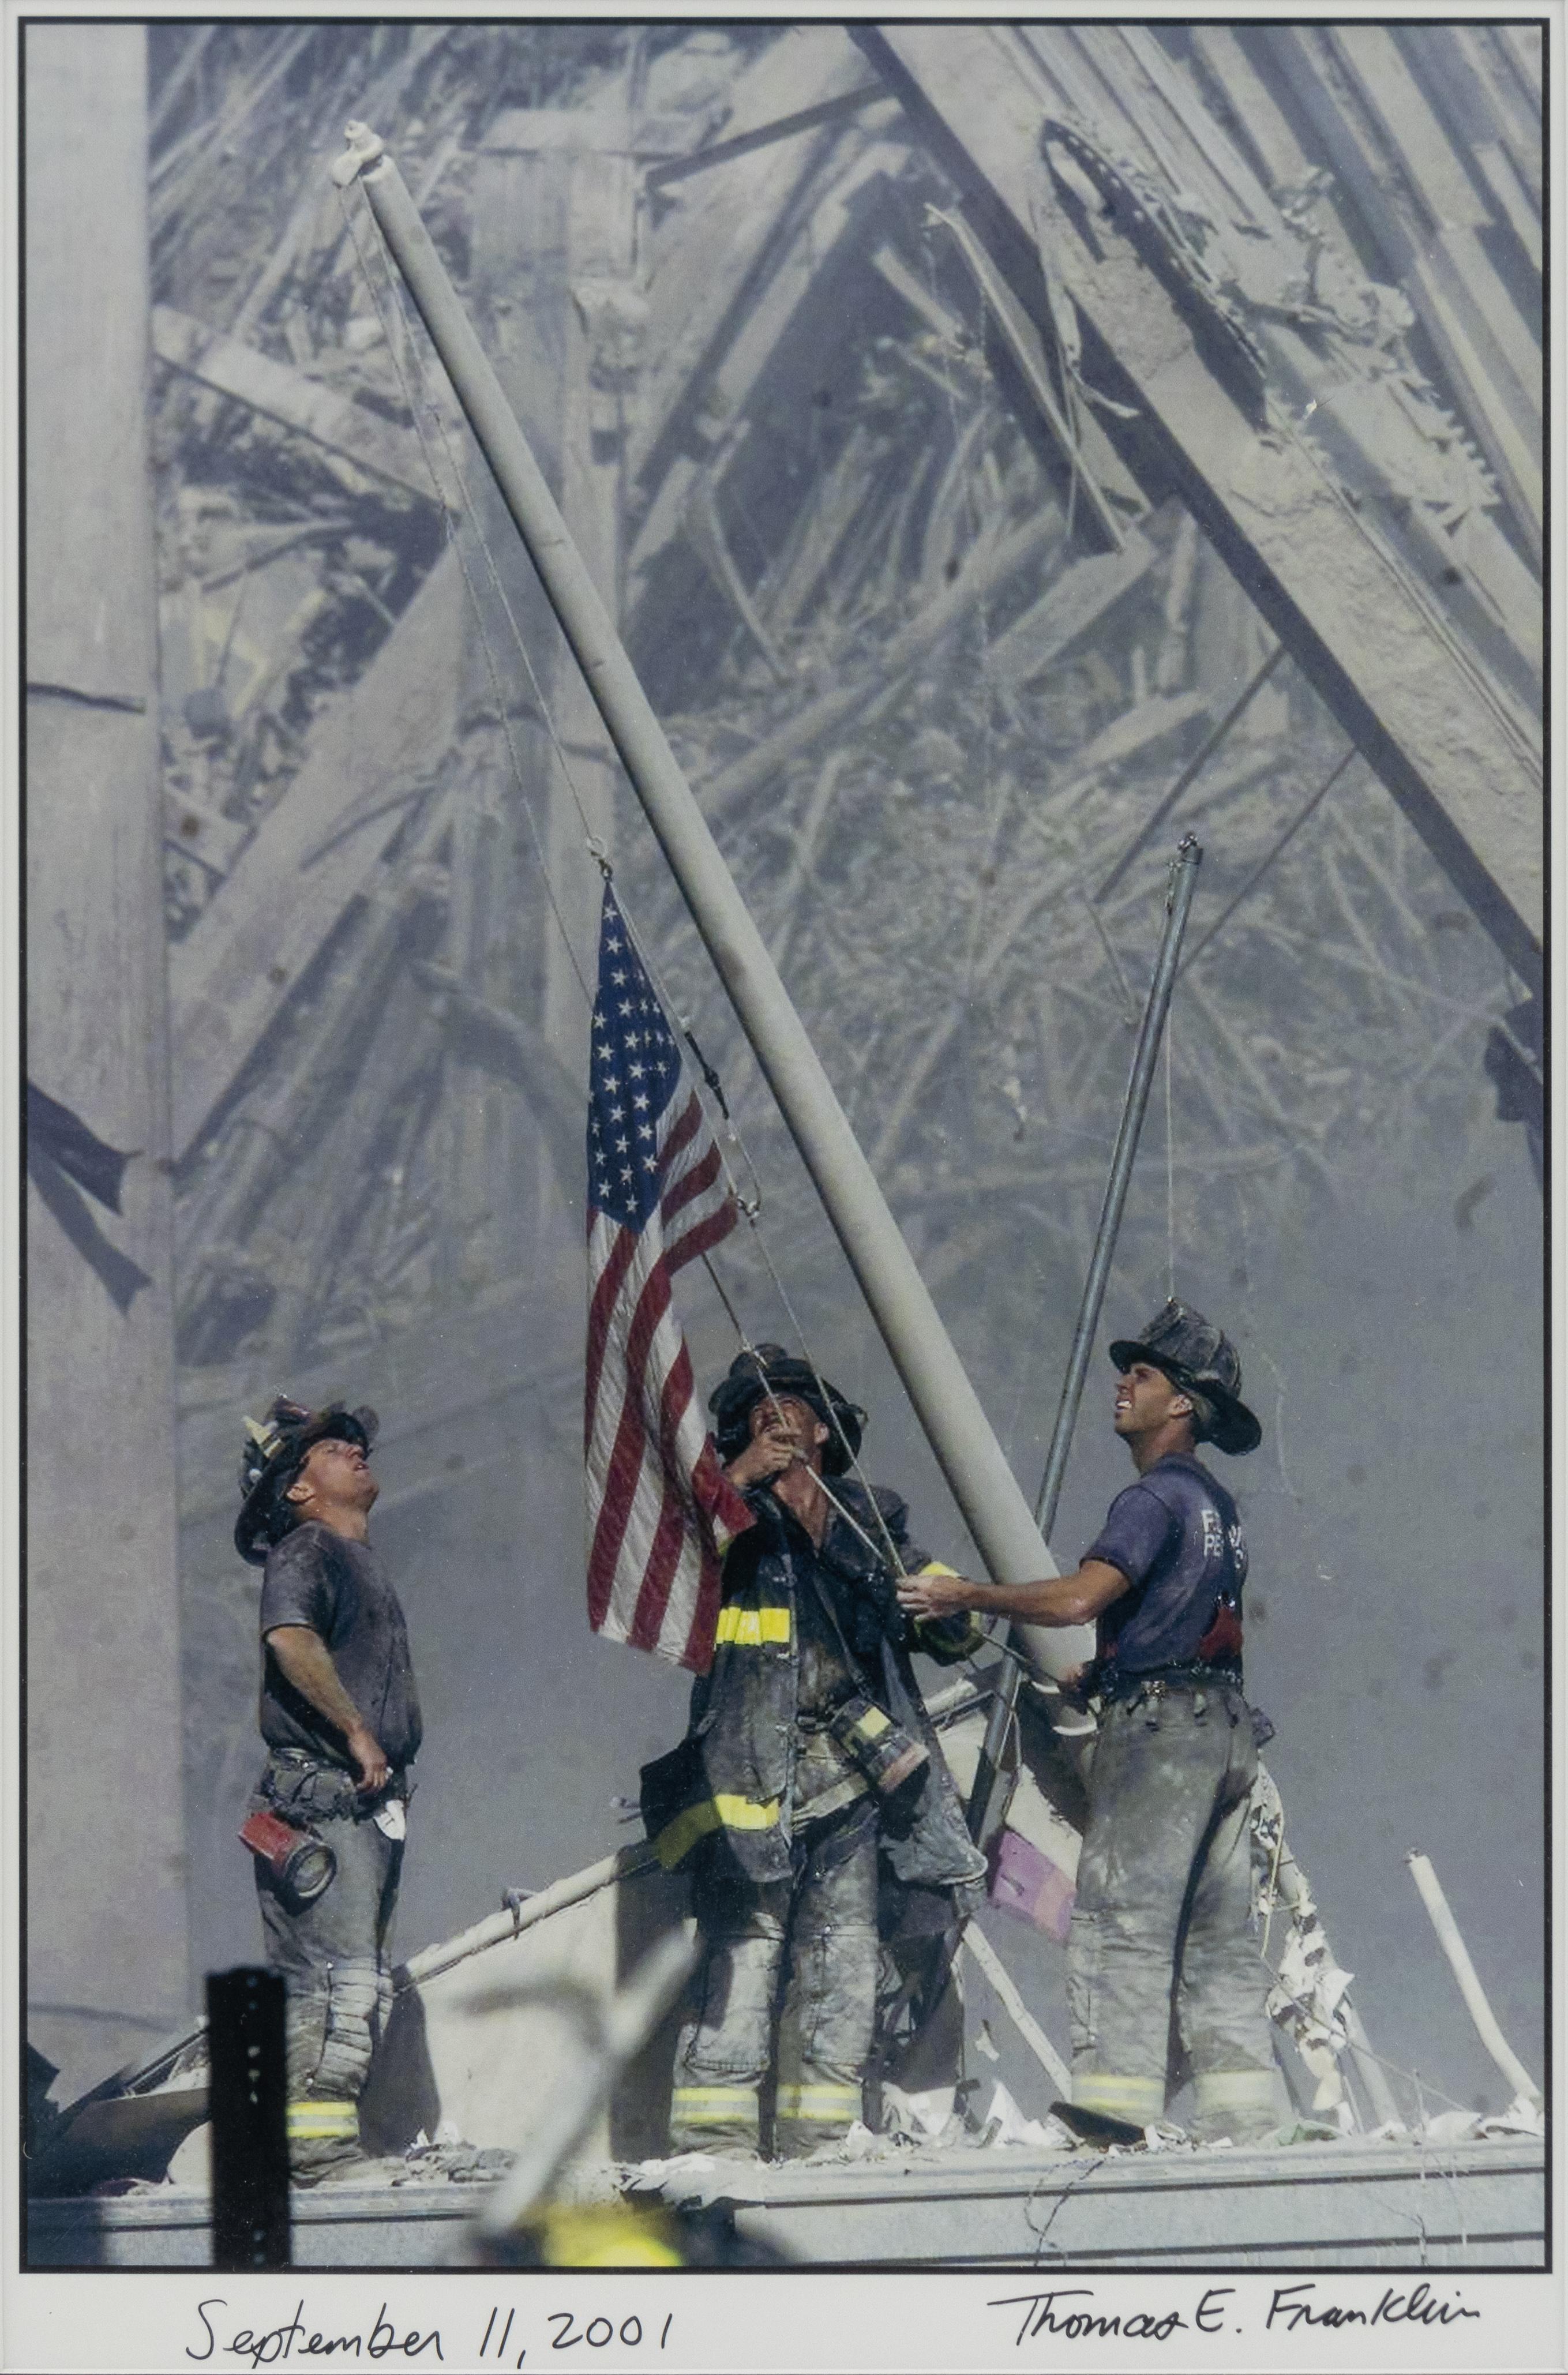 September 11th, 2001 - Photograph by Thomas E. Franklin